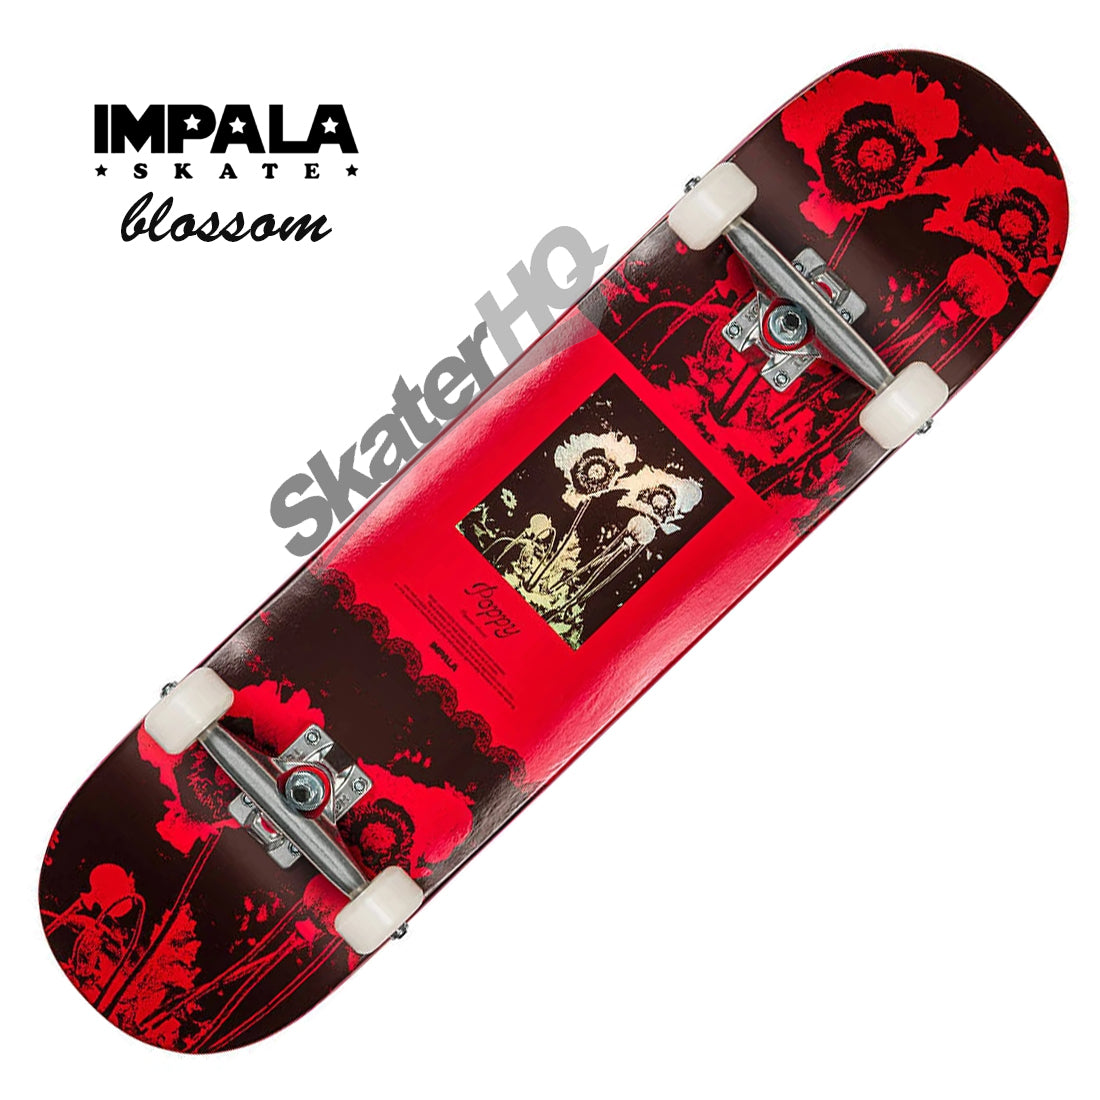 Impala Blossom Poppy 8.0 Complete - Red Skateboard Completes Modern Street